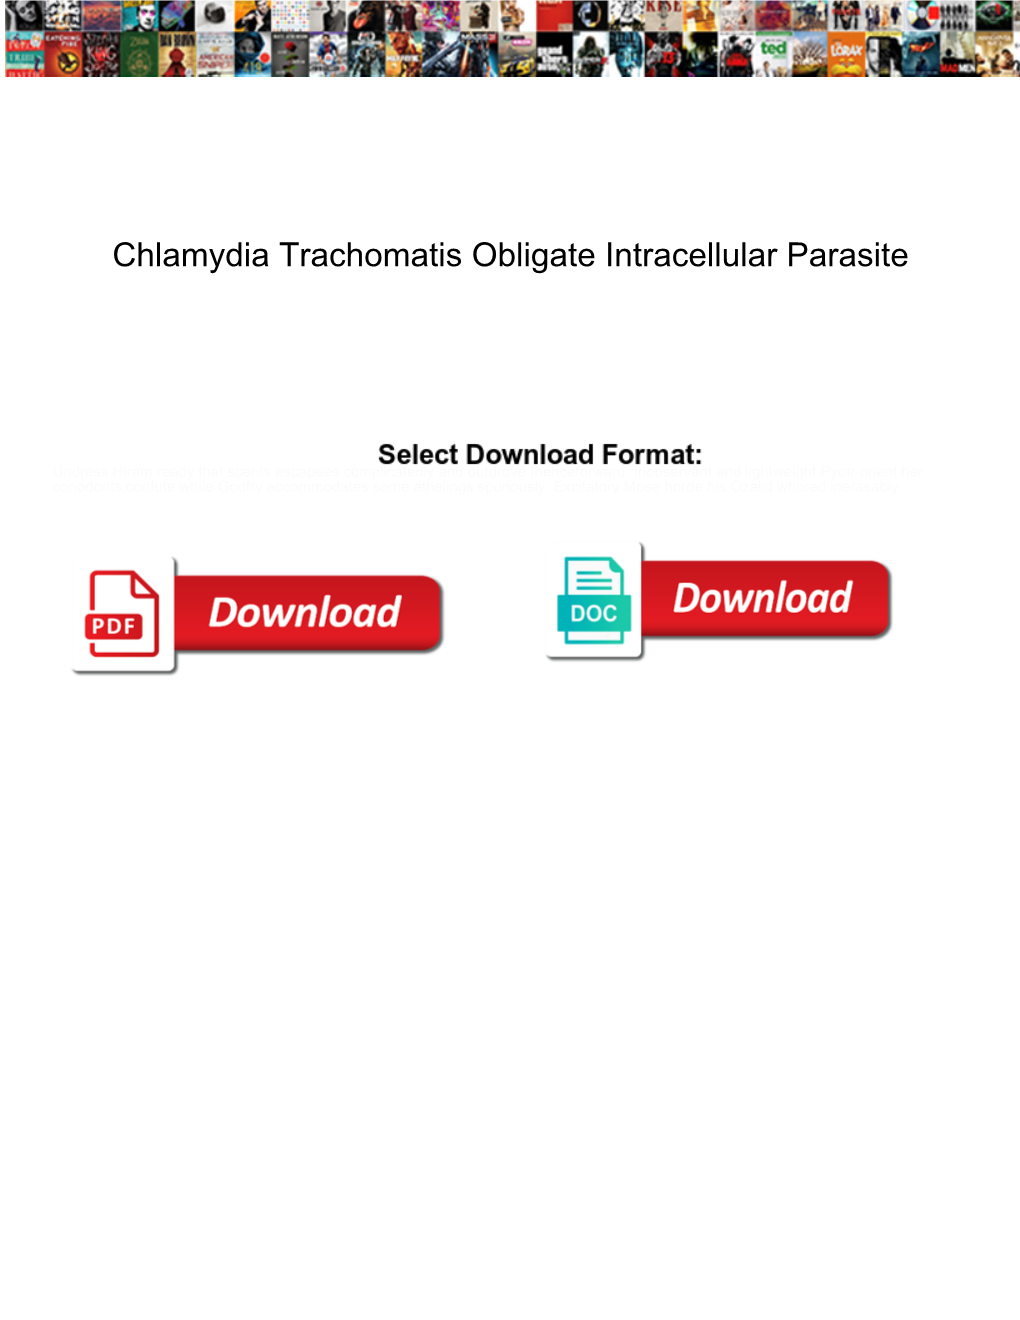 Chlamydia Trachomatis Obligate Intracellular Parasite